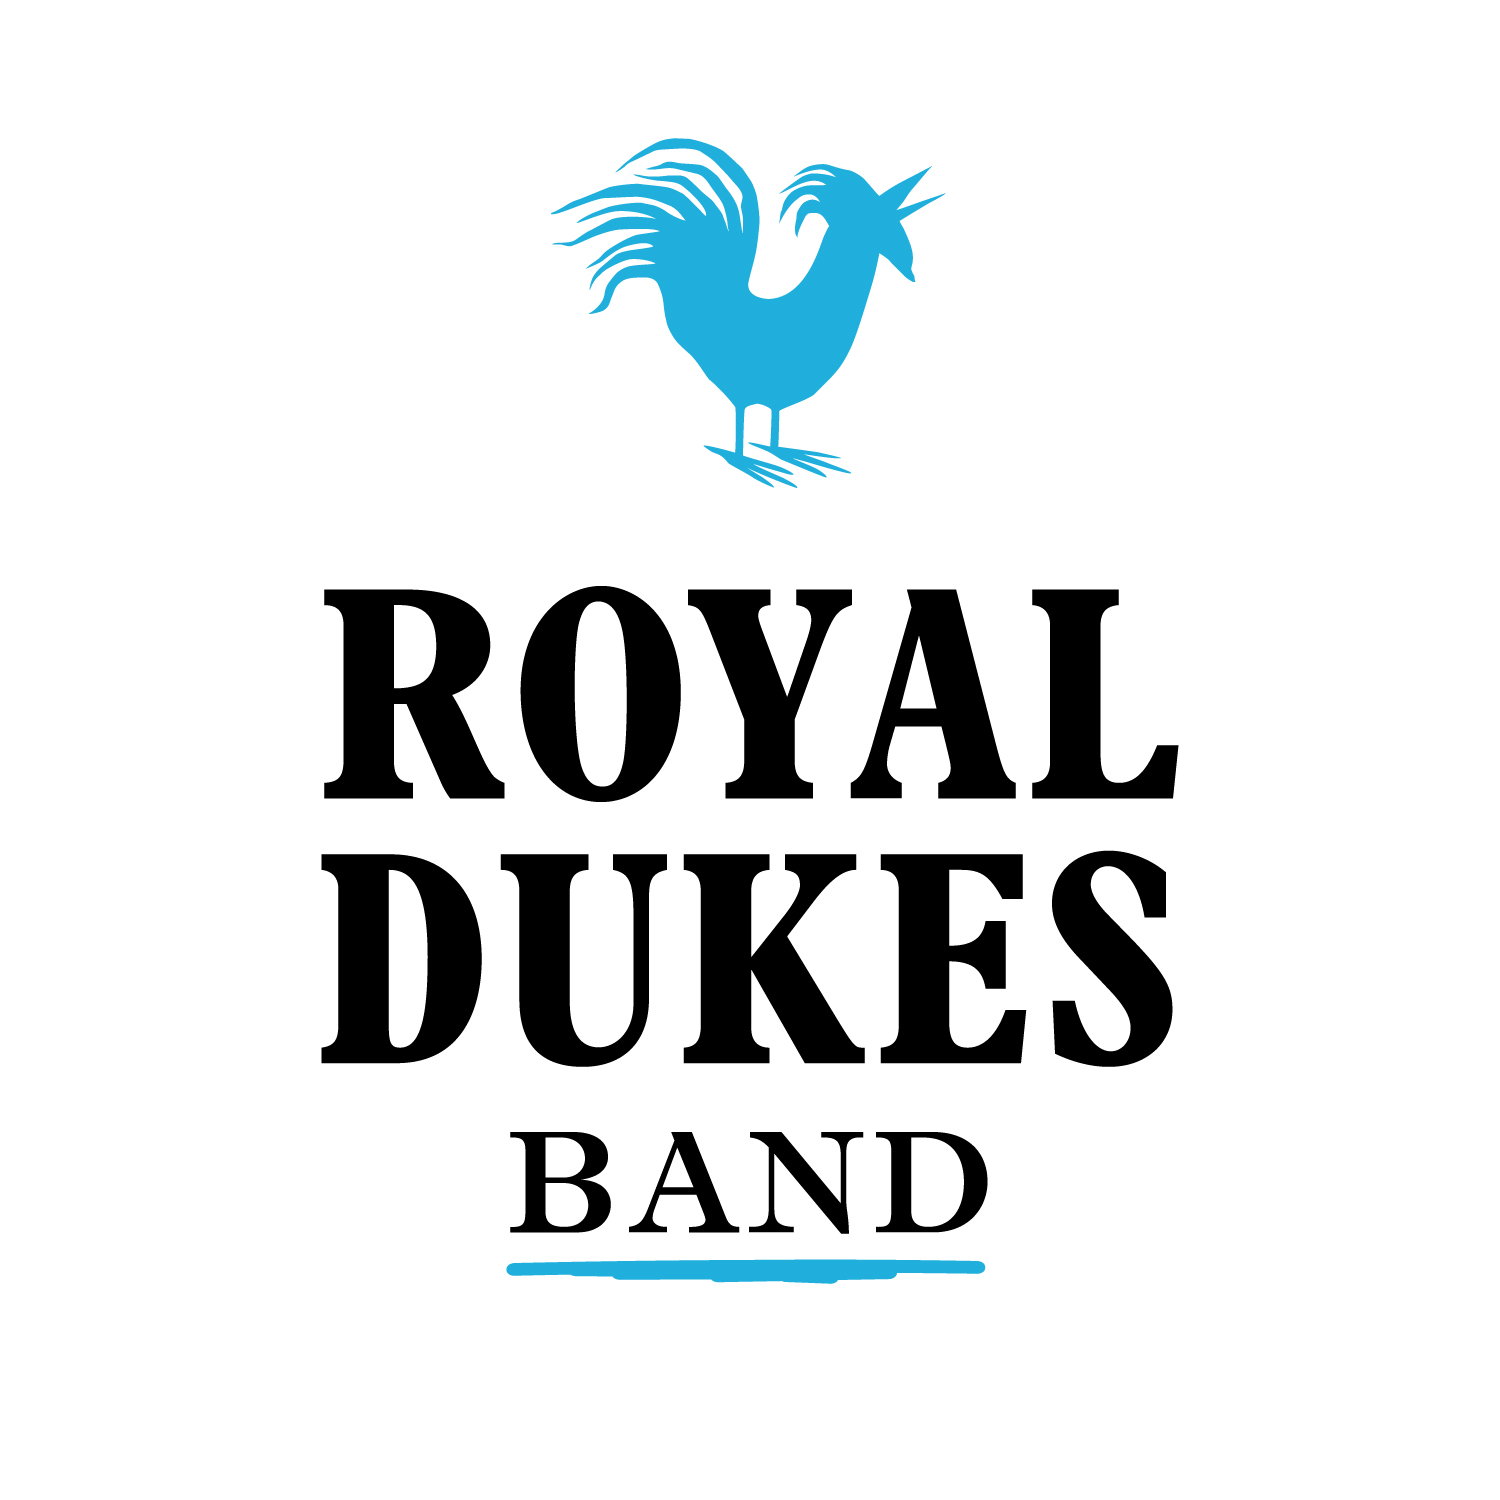 Royal Dukes Band